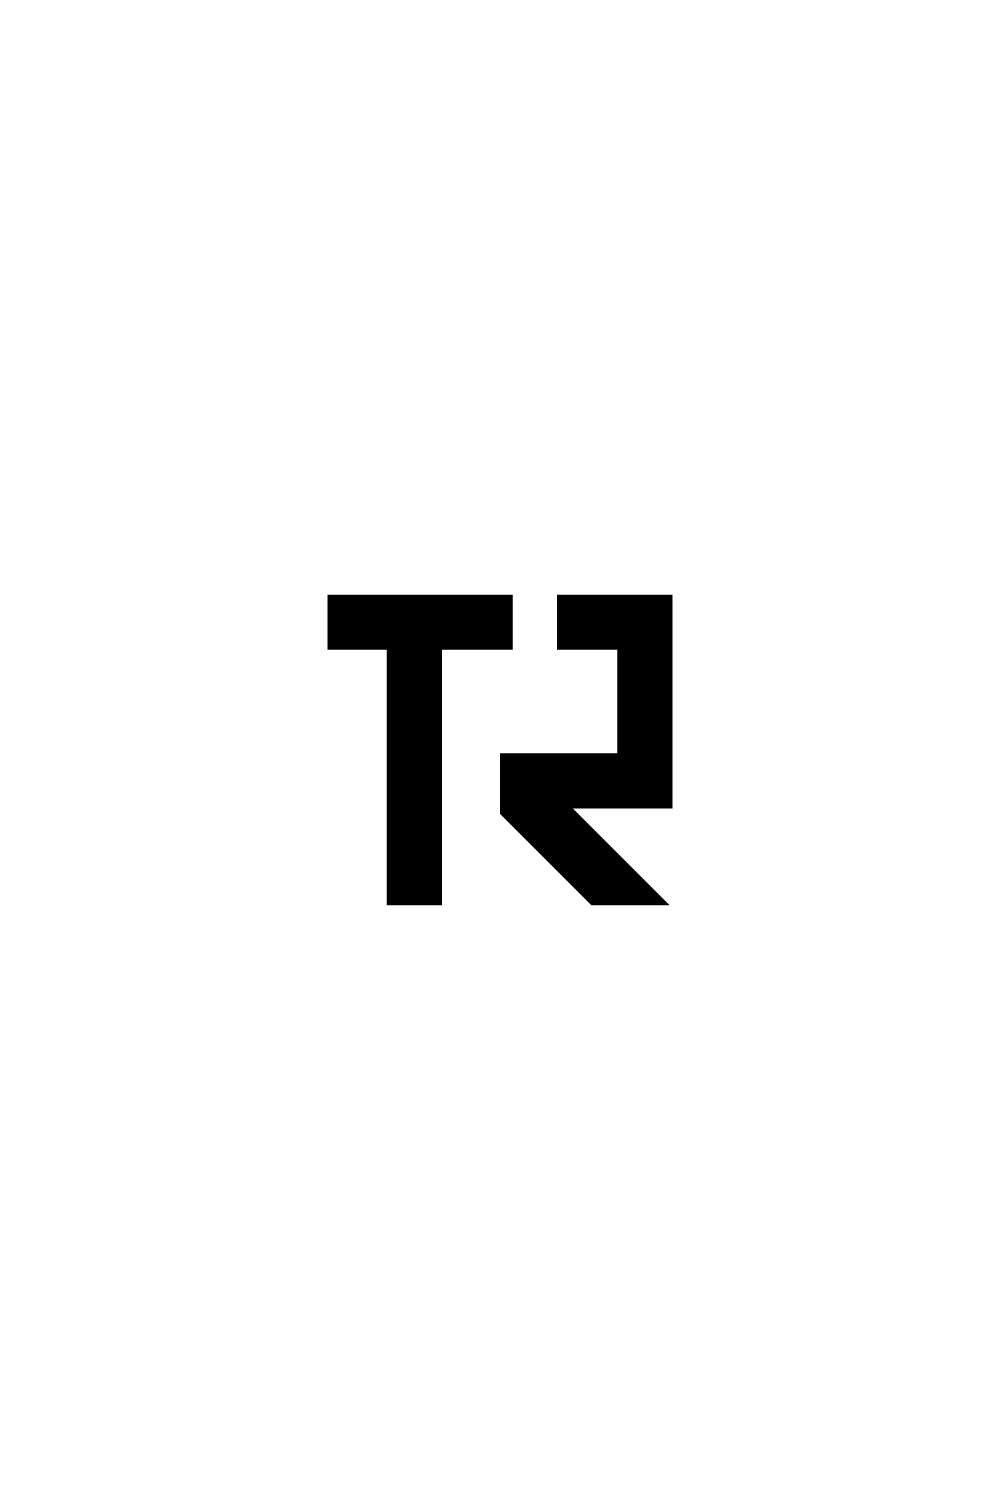 TR Logo Design Pinterest image.